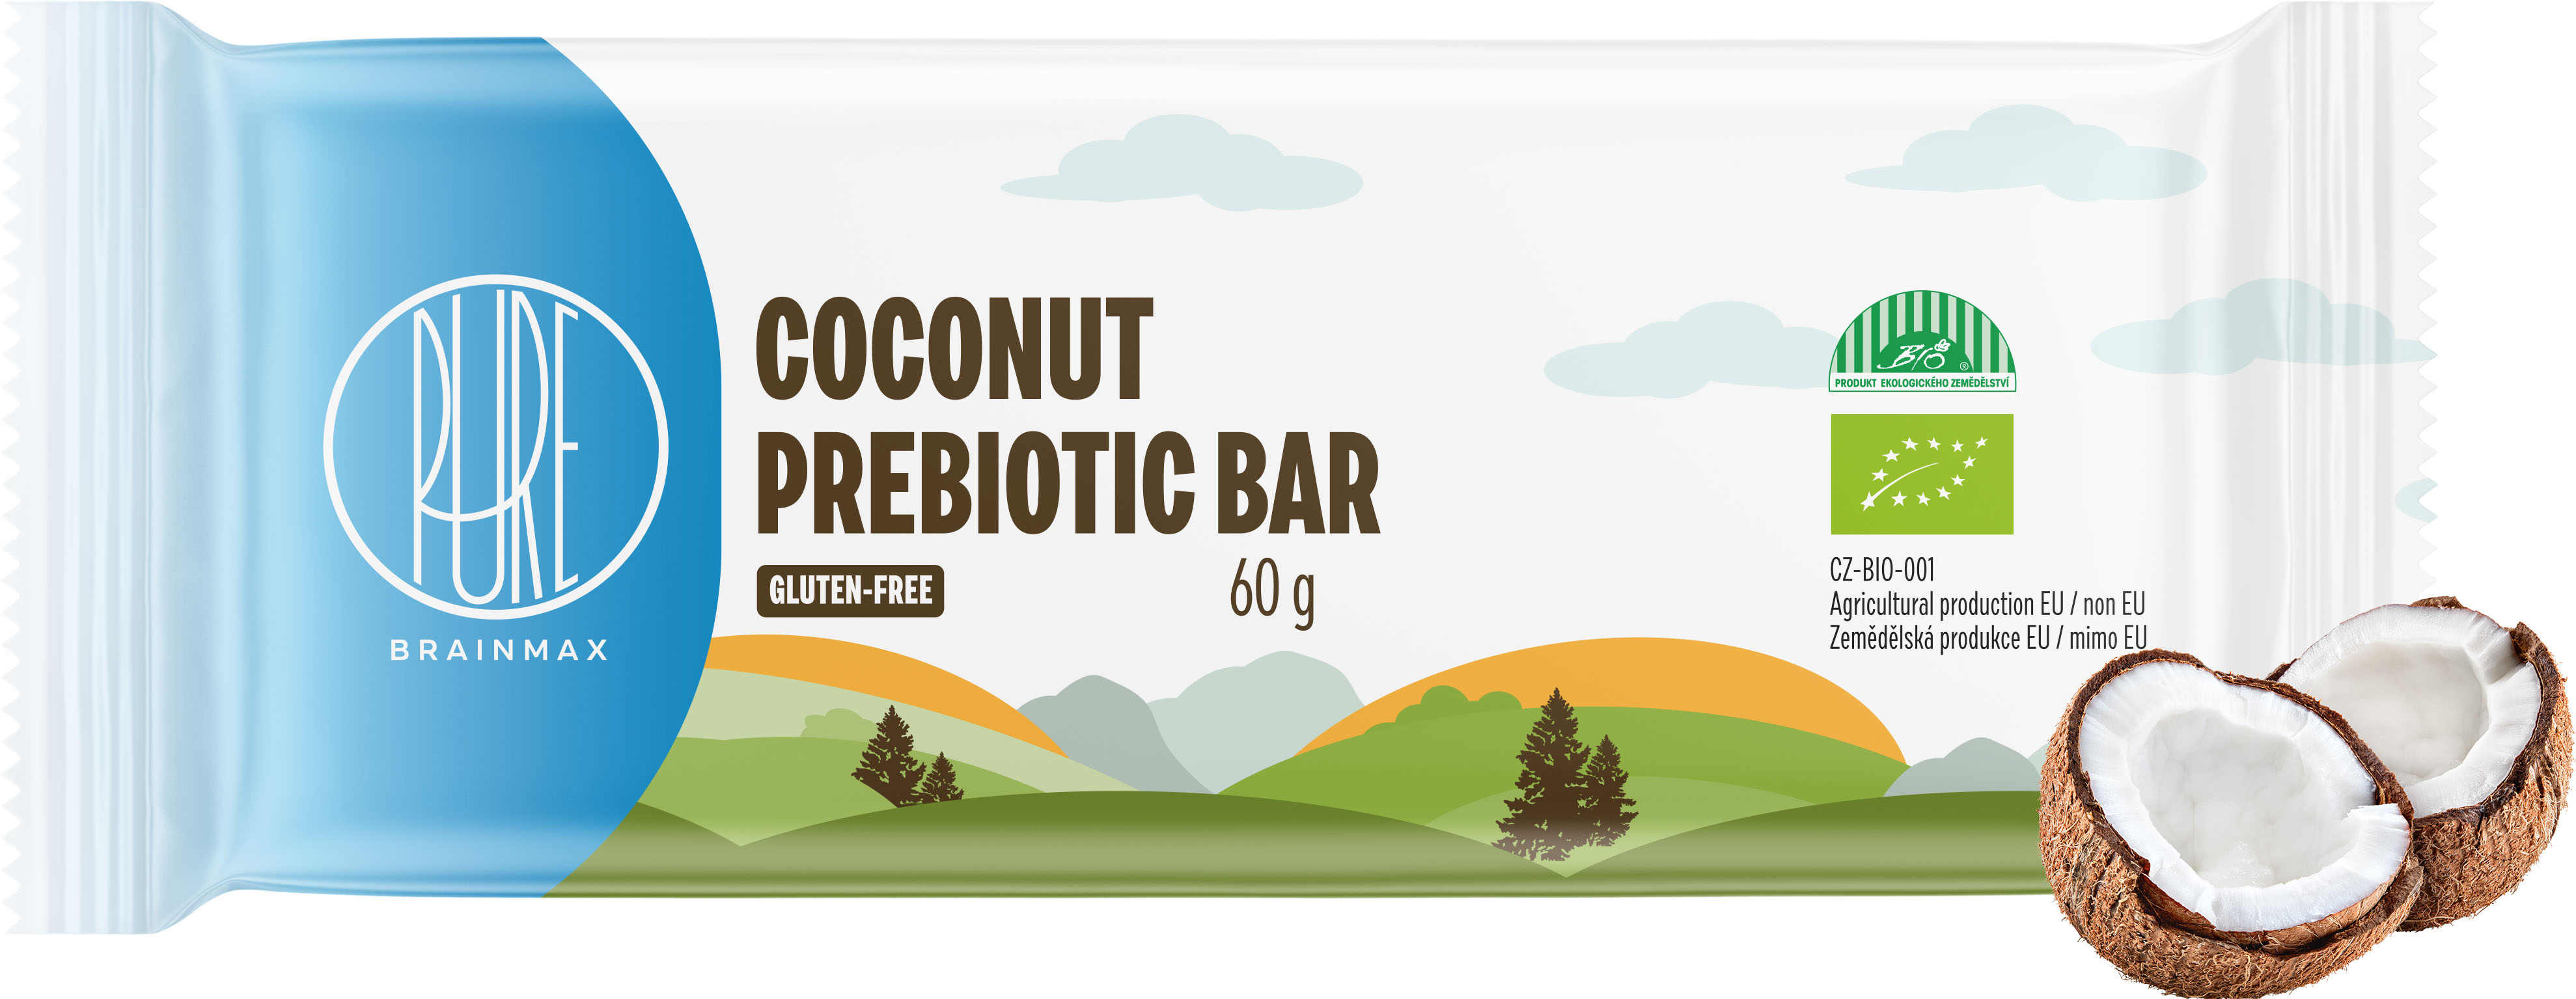 BrainMax Pure Coconut Prebiotic Bar, tyčinka s vlákninou, Kokos, BIO, 60 g *CZ-BIO-001 certifikát / kokosová tyčinka s vlákninou